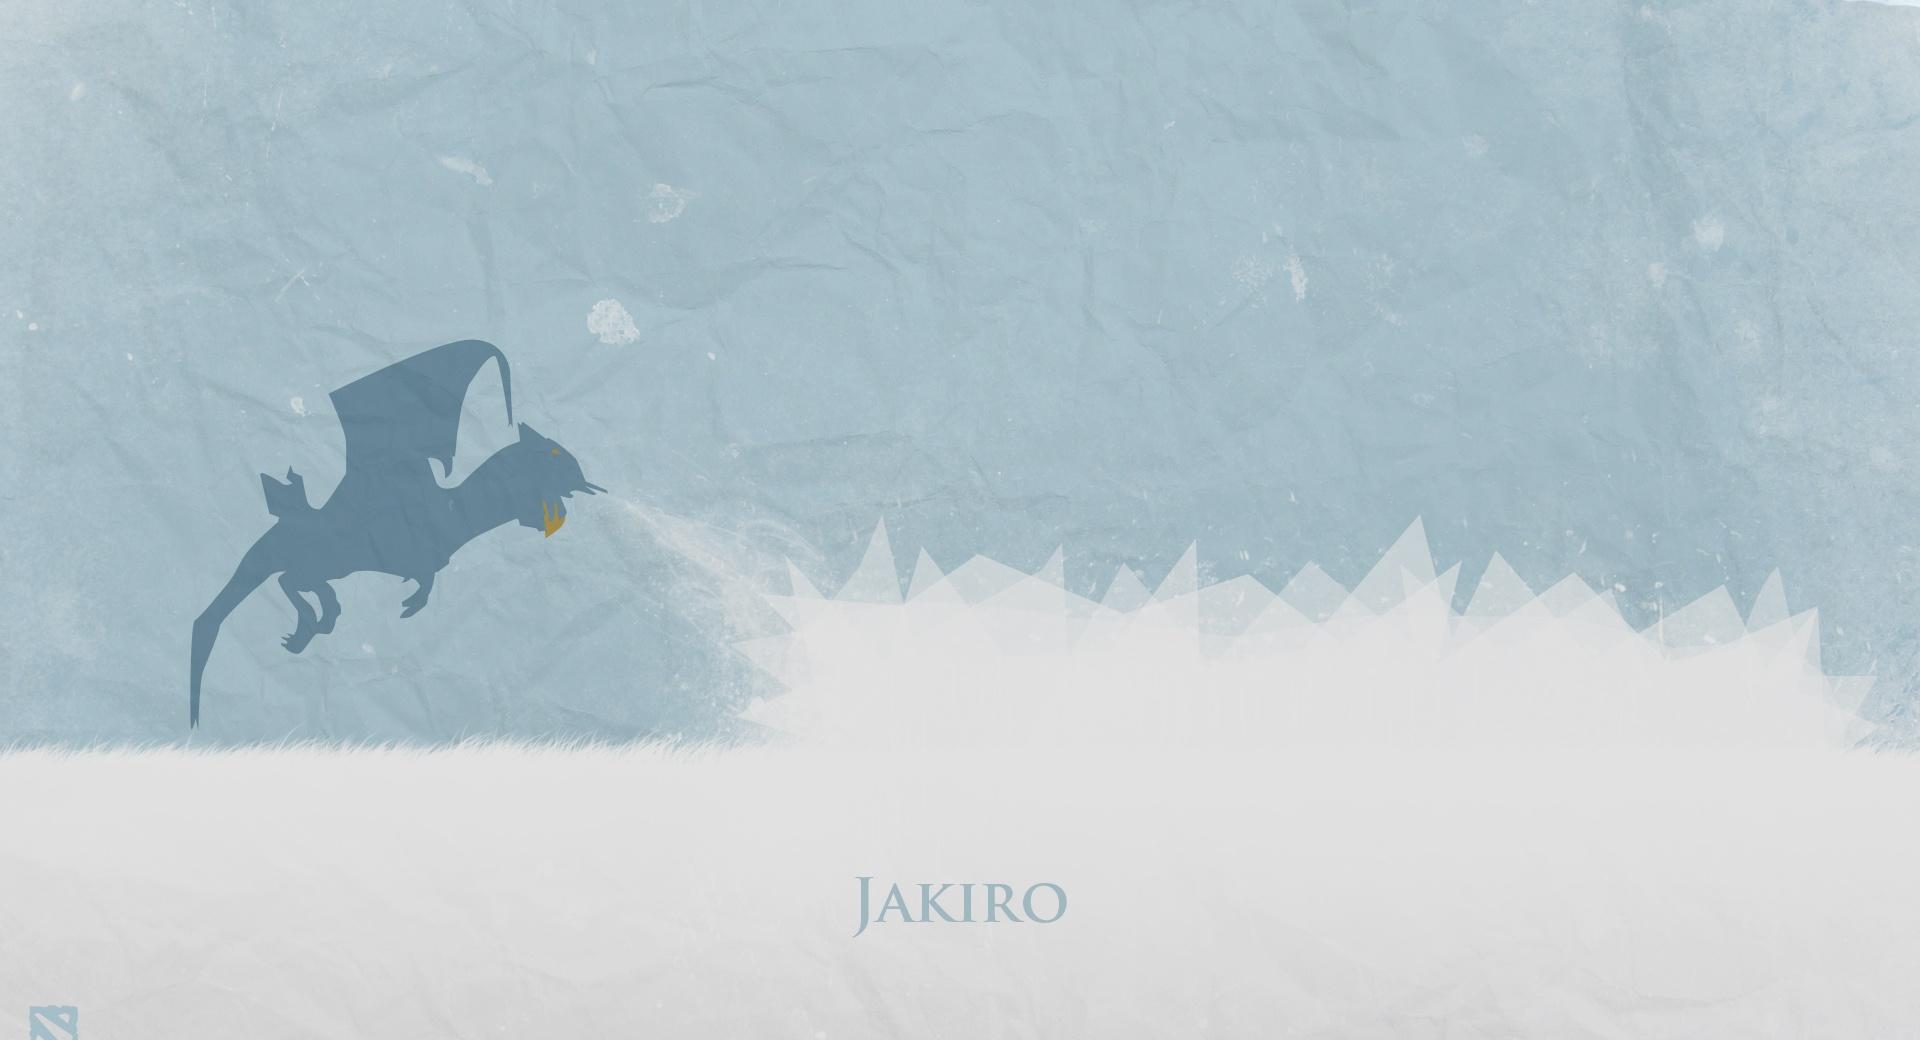 Jakiro - DotA 2 at 2048 x 2048 iPad size wallpapers HD quality